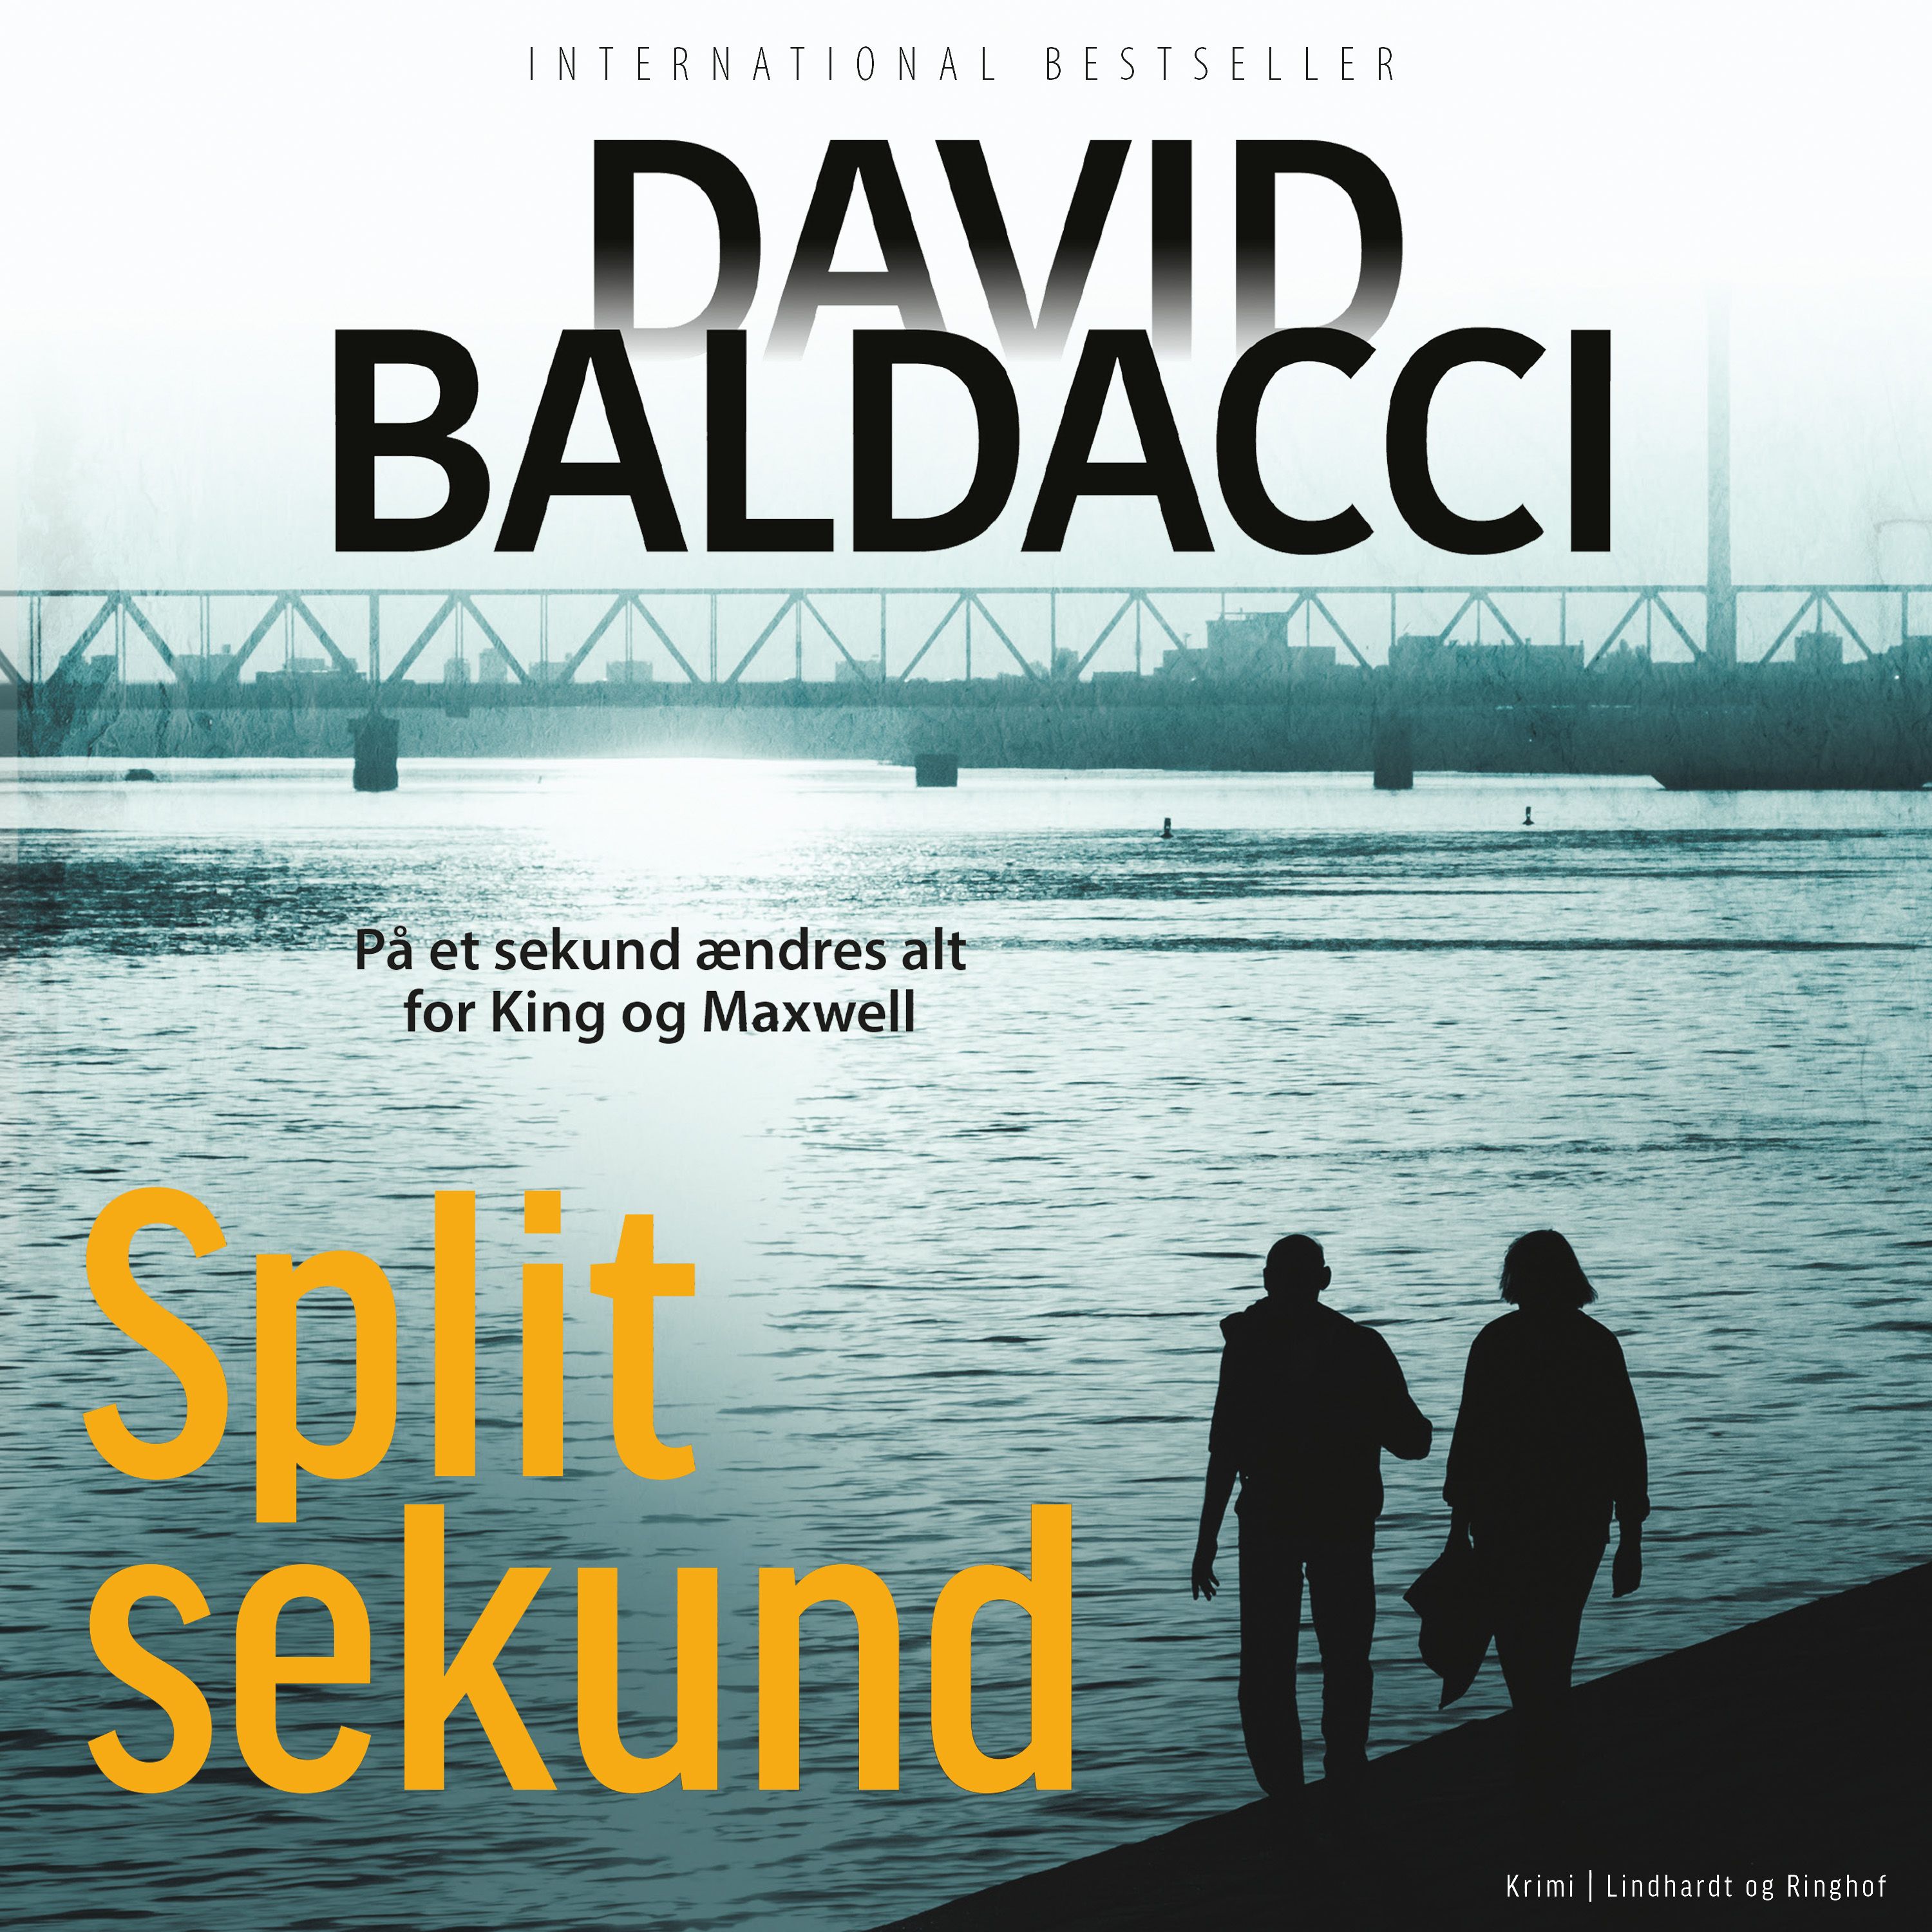 Splitsekund, audiobook by David Baldacci